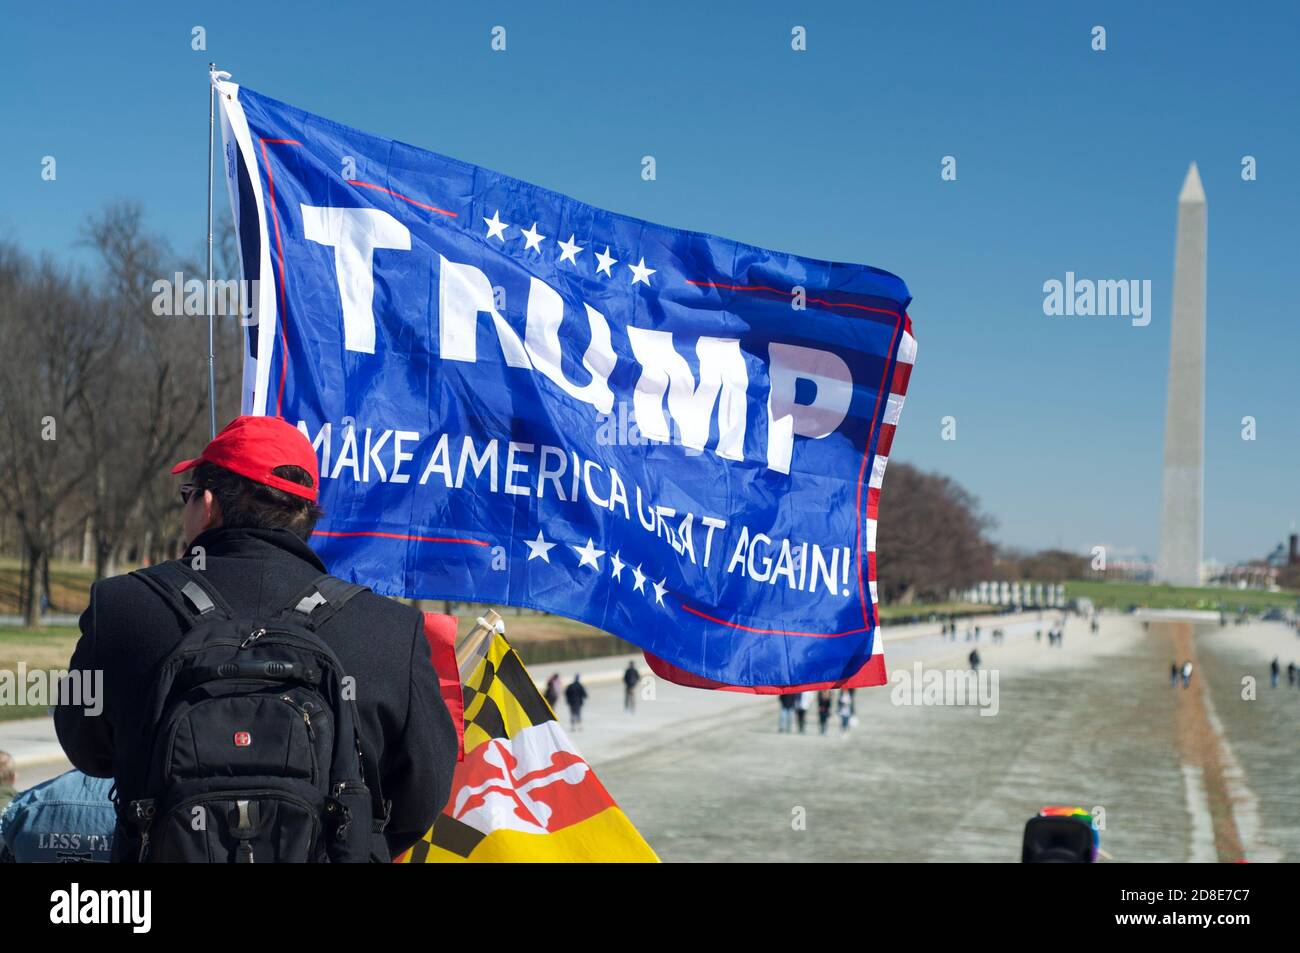 Make America Great Again campaign in Washington DC near Lincoln Memorial in 2018 Stock Photo